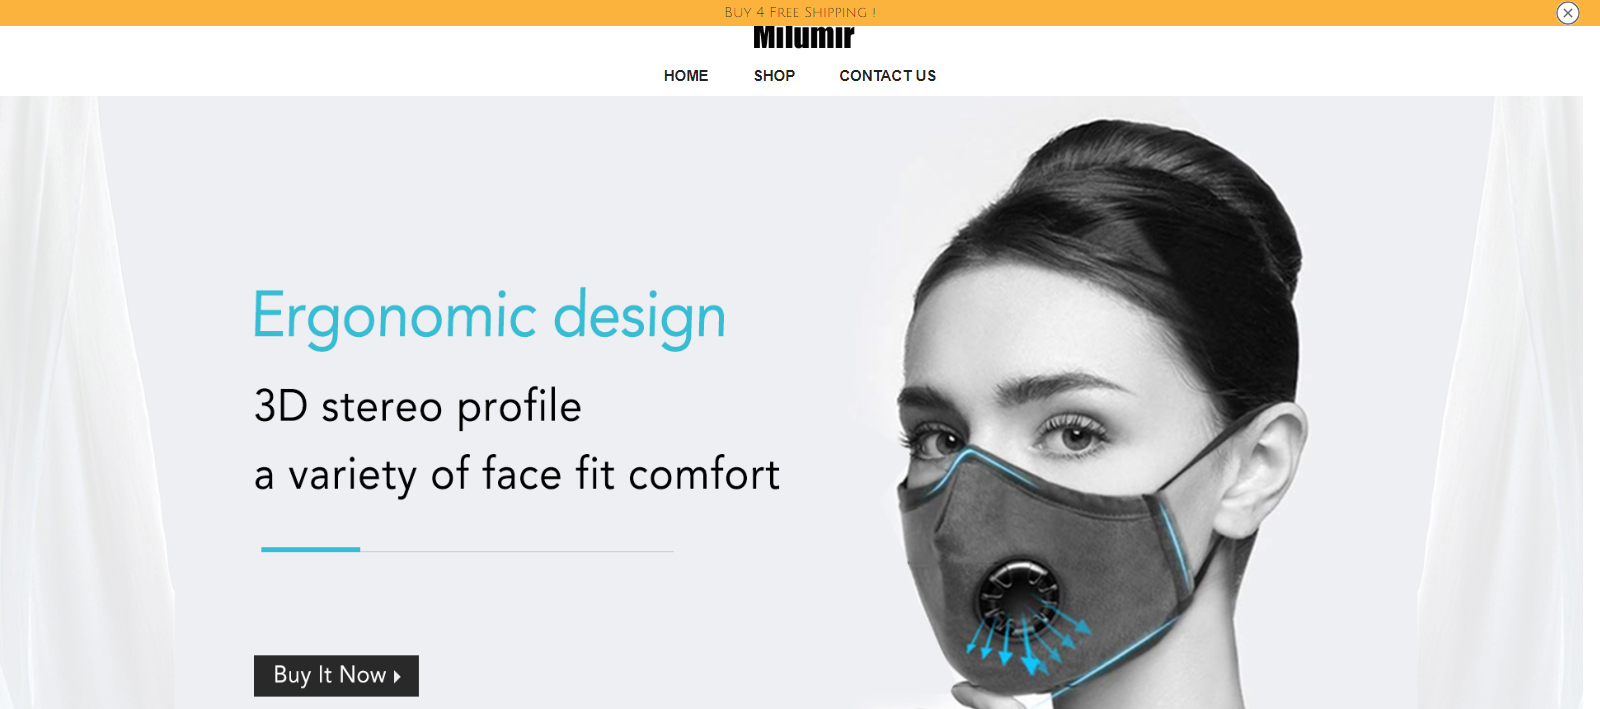 Milumir Homepage Image